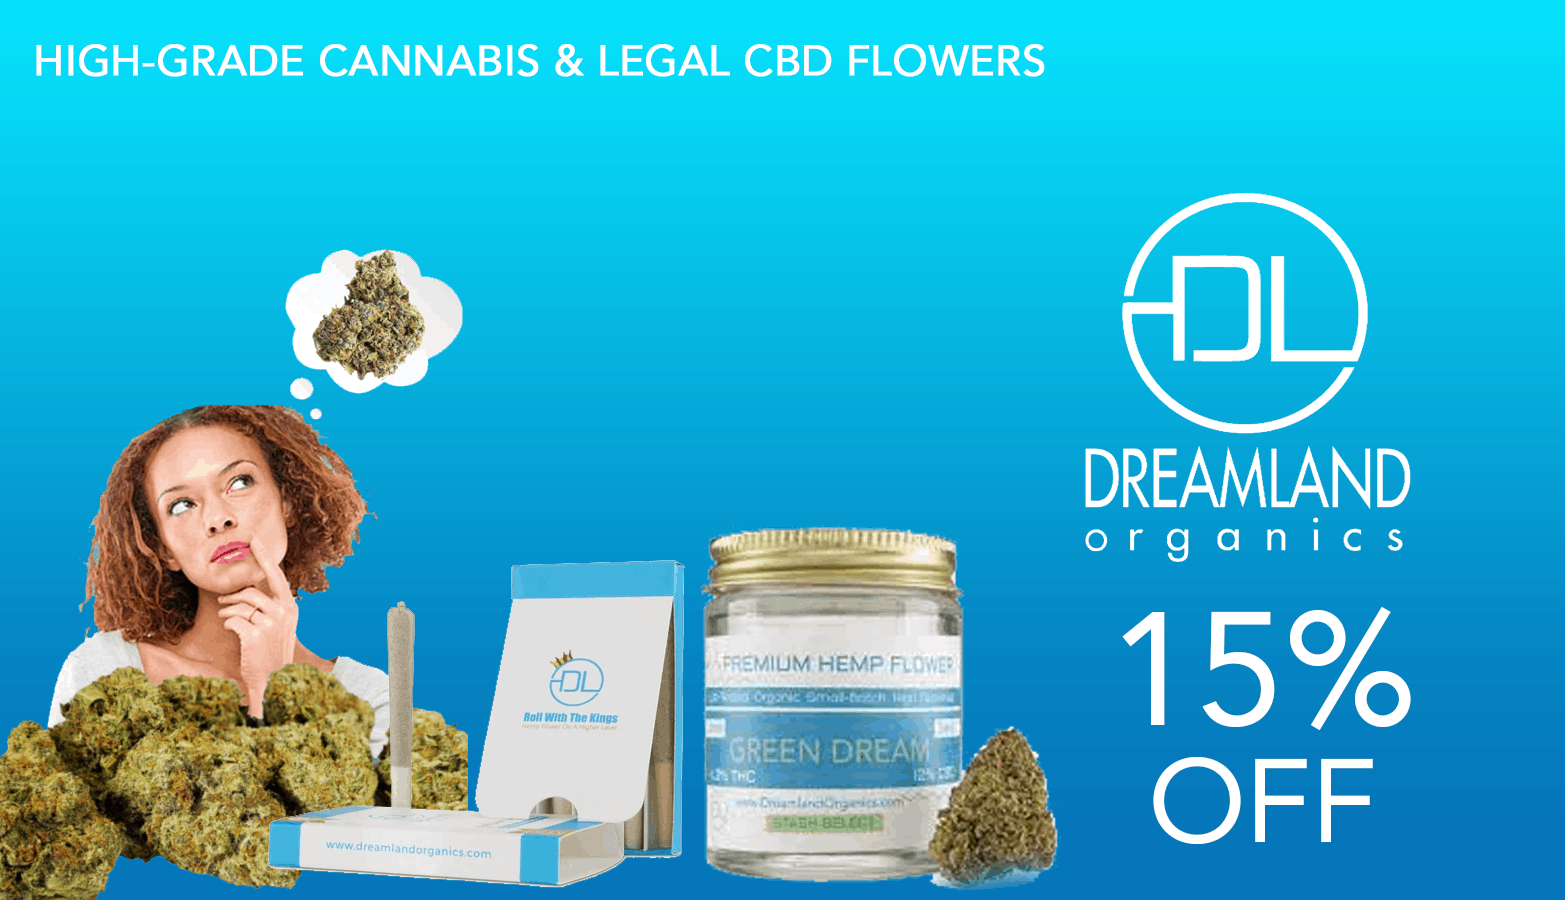 Dreamland Organics Cannabis Coupon Code Offer Website